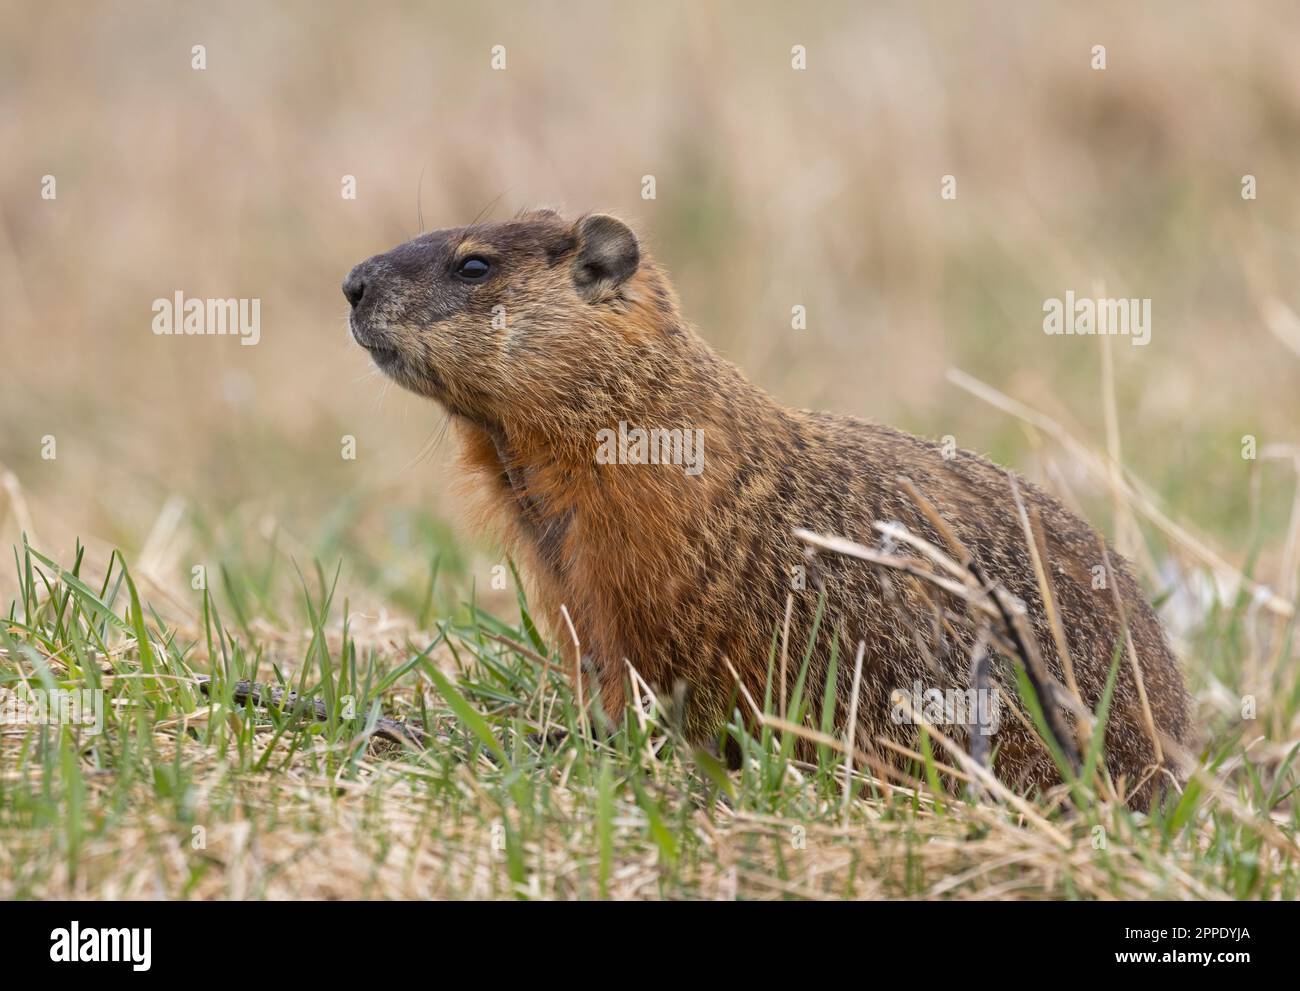 A groundhog in a grassy rural field in springtime in Muskoka Stock Photo